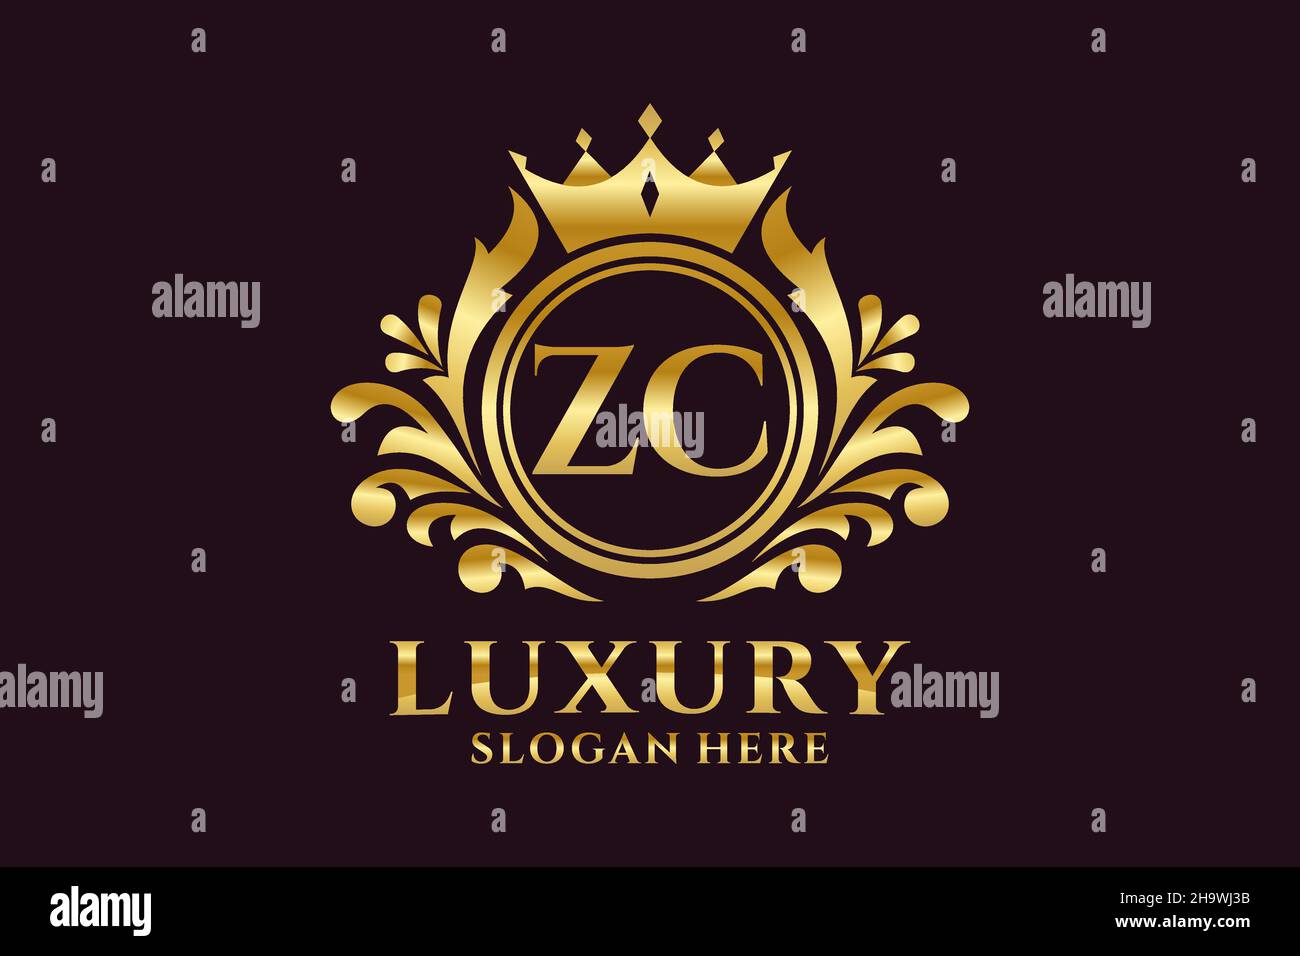 ZC Letter Royal Luxury Logo-Vorlage in Vektorgrafik für luxuriöse Branding-Projekte und andere Vektorgrafik. Stock Vektor